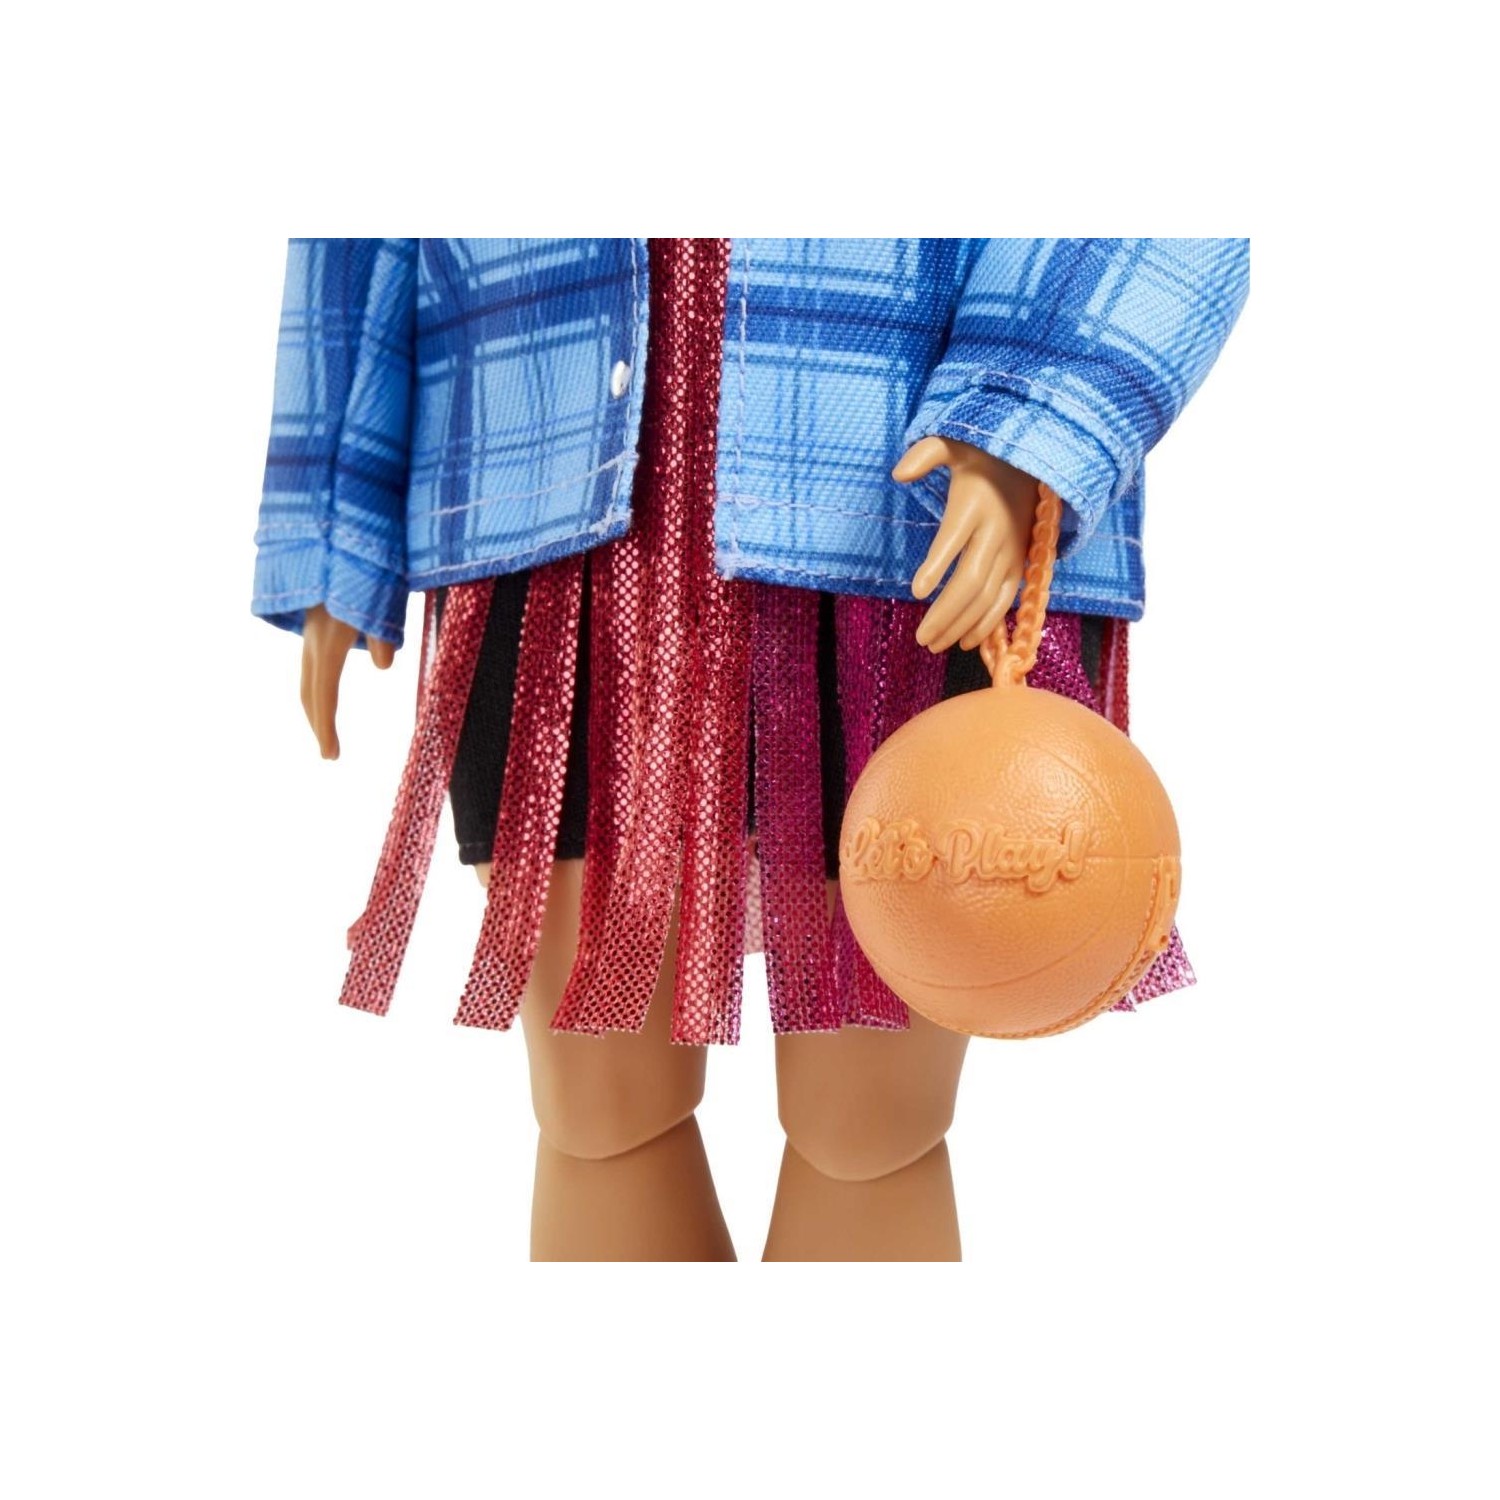 Кукла Barbie Extra Baby in Plaid Jacket, Corgi Dog HDJ46 мягкая кукла легкая функциональная тщательная работа корги собака плюшевая кукла